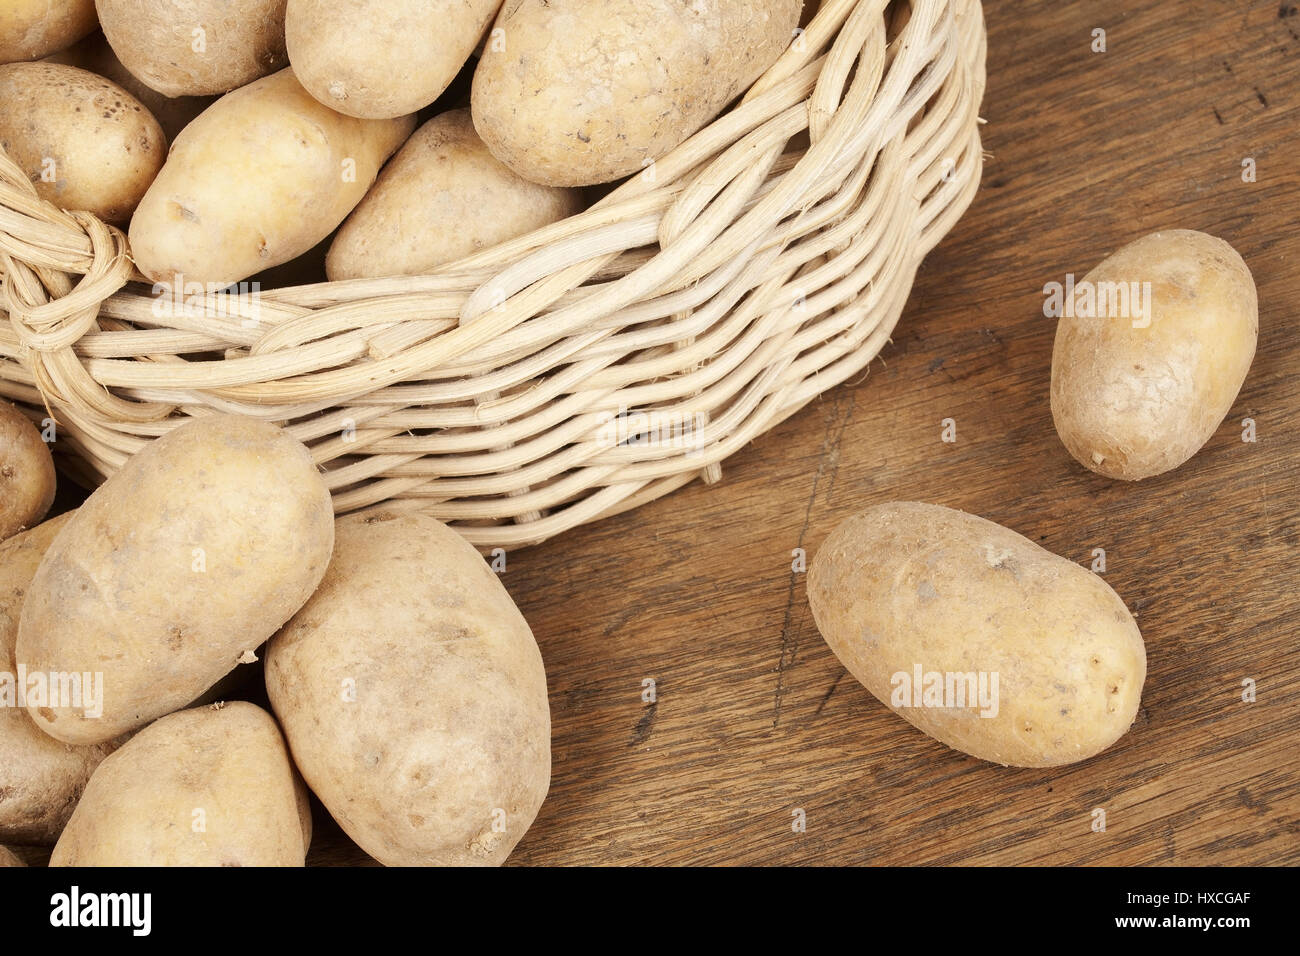 Basket with potatoes, Basket of potatoes |, Korb mit Kartoffeln |Basket of potatoes| Stock Photo